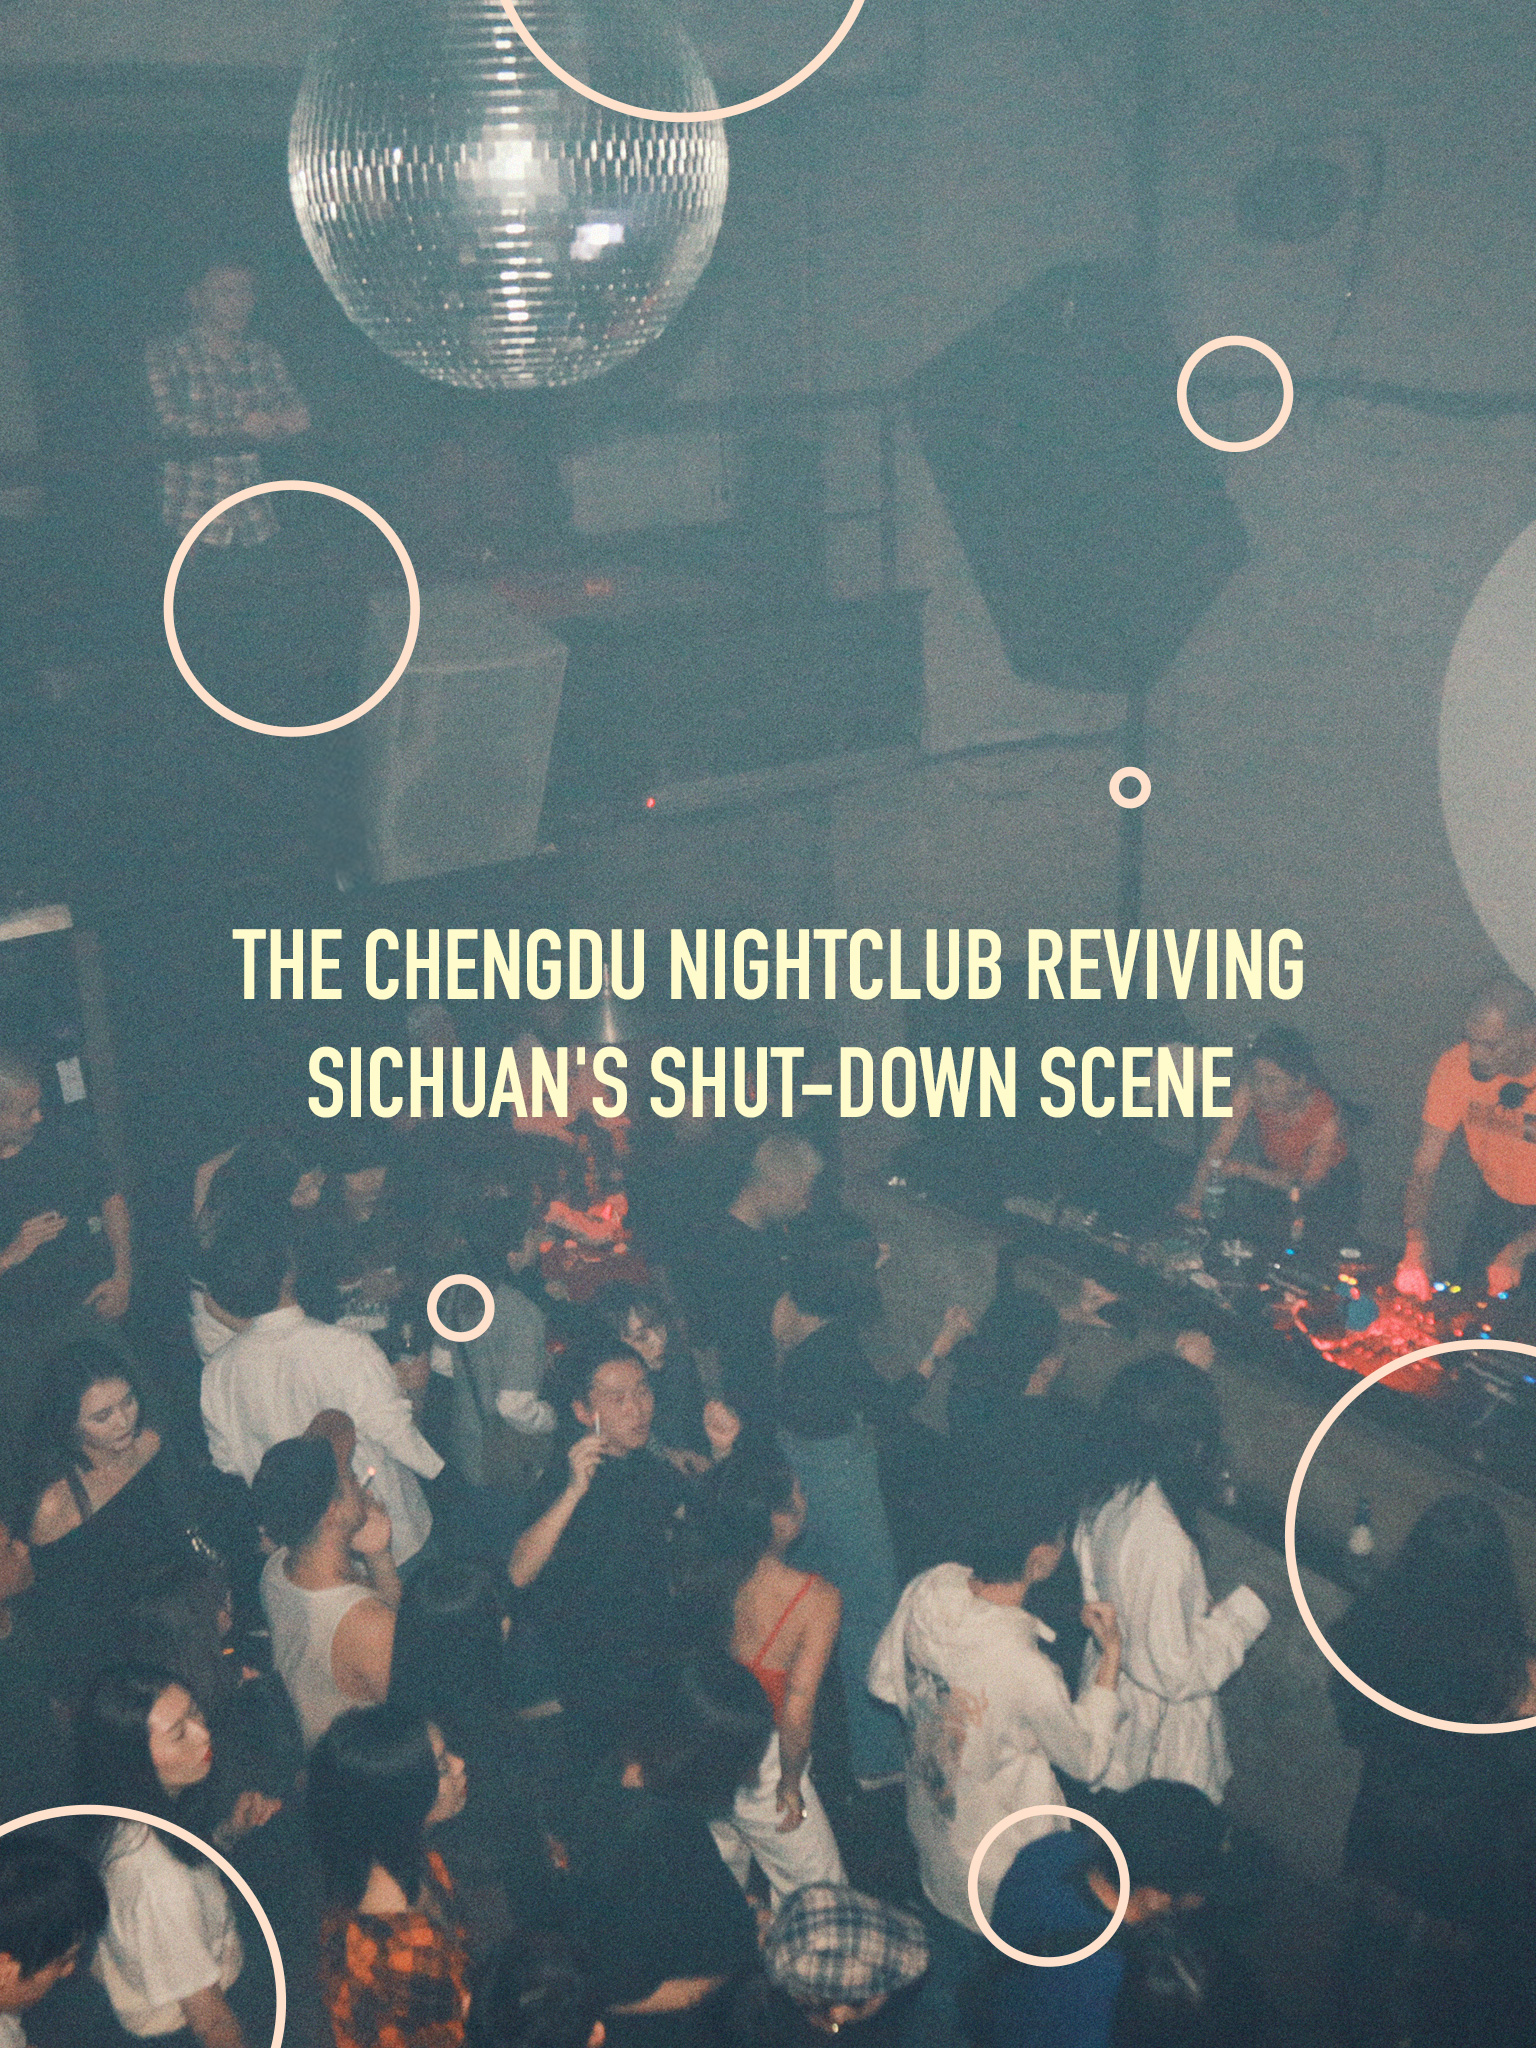 The Chengdu Nightclub Reviving Sichuan's Shut-Down Scene